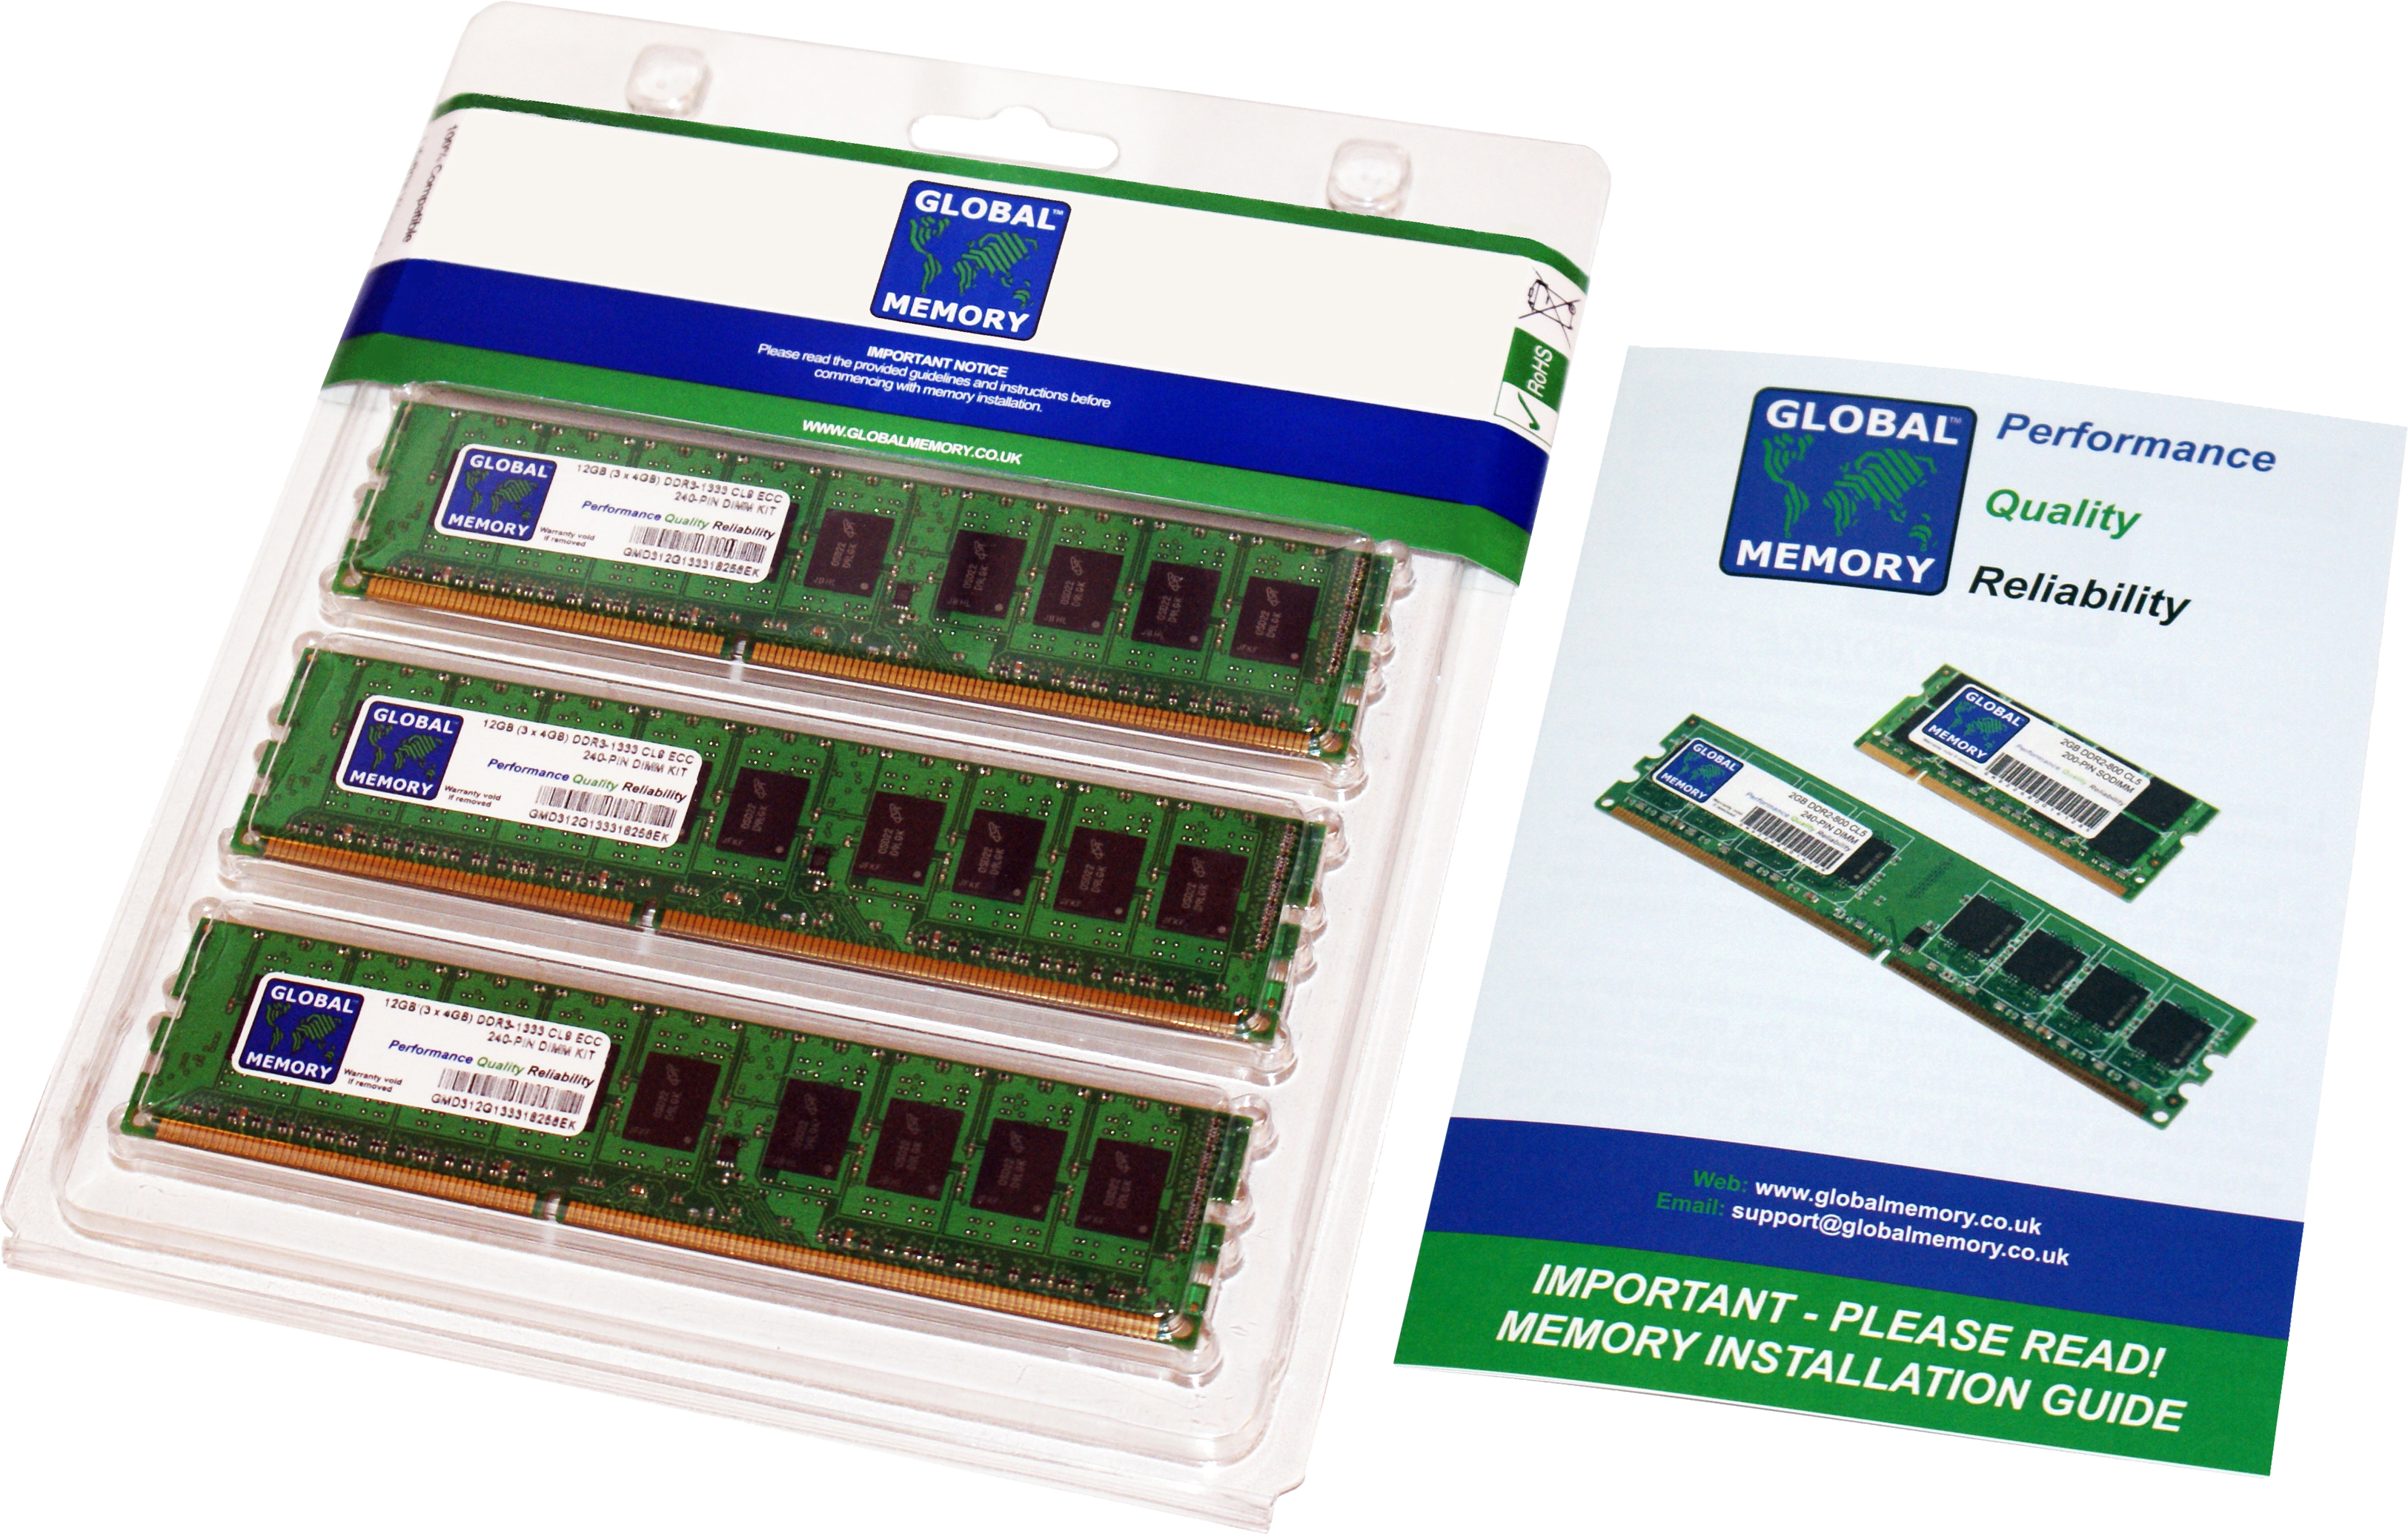 12GB (3 x 4GB) DDR3 1866MHz PC3-14900 240-PIN ECC DIMM (UDIMM) MEMORY RAM KIT FOR FUJITSU SERVERS/WORKSTATIONS